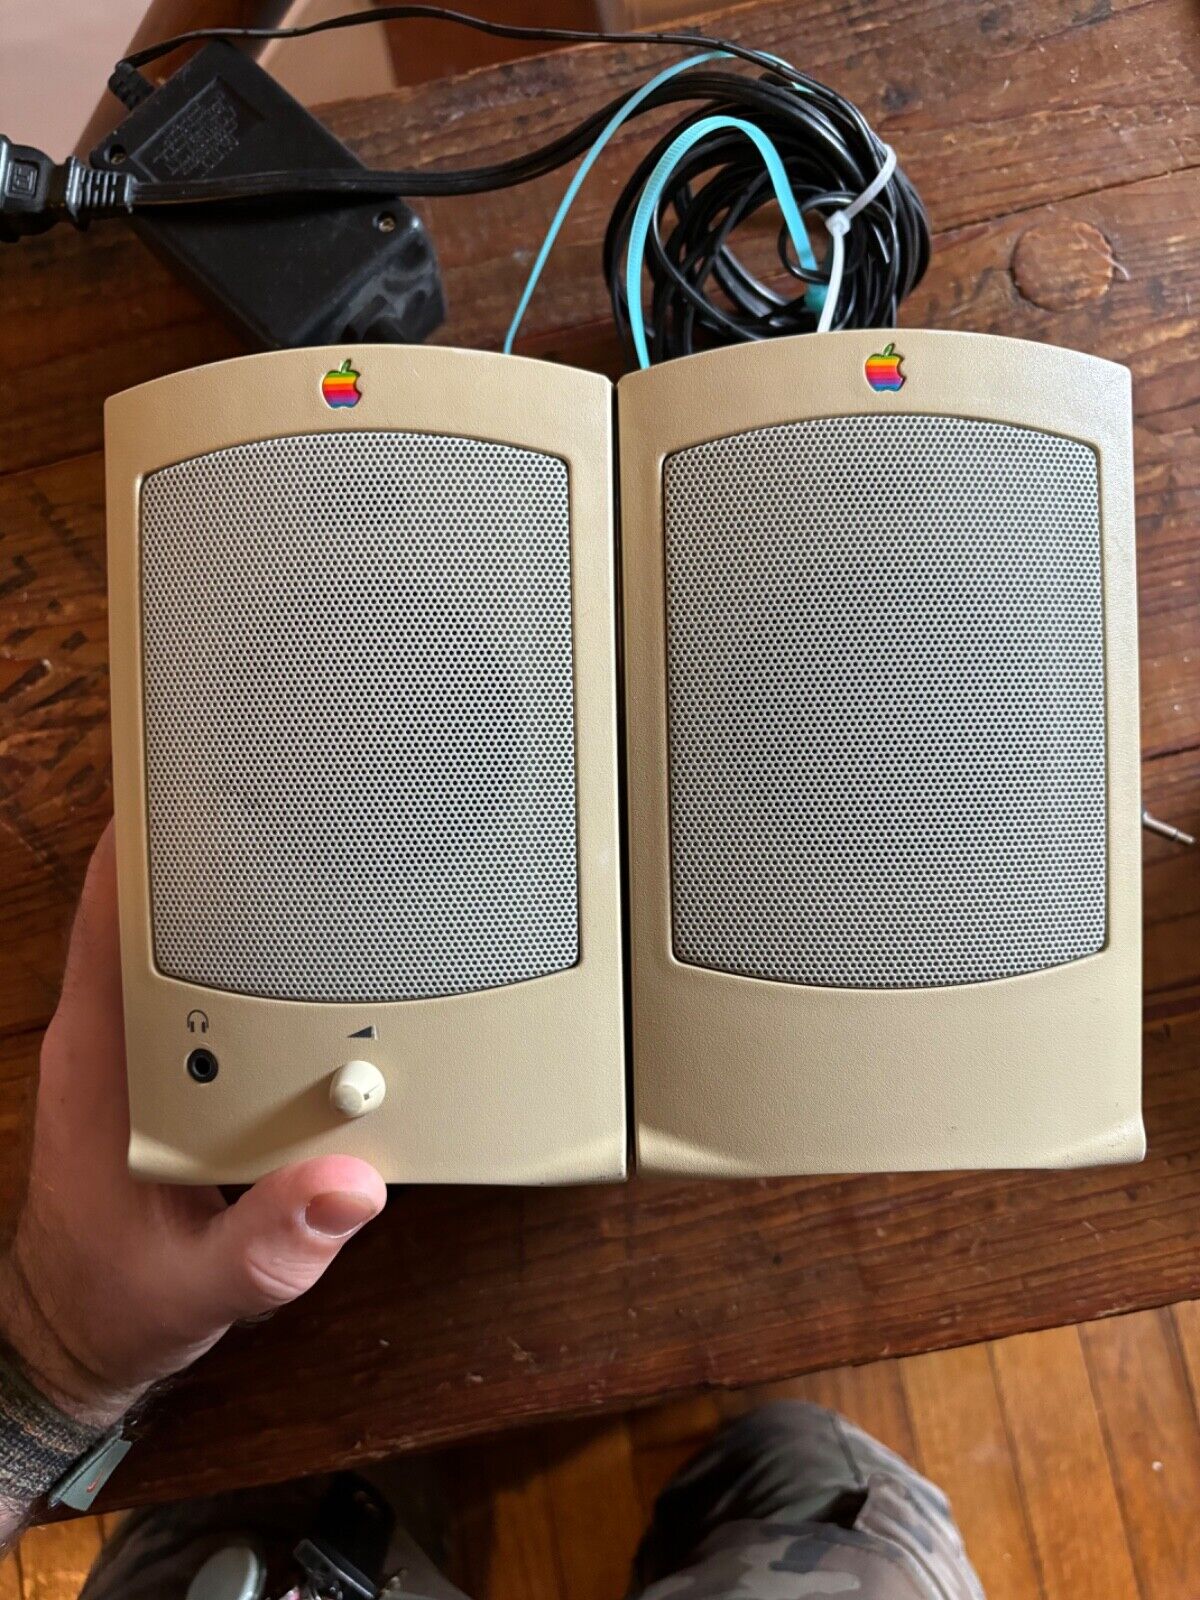 Vintage Apple Design Powered Speakers - classic Mac - nice